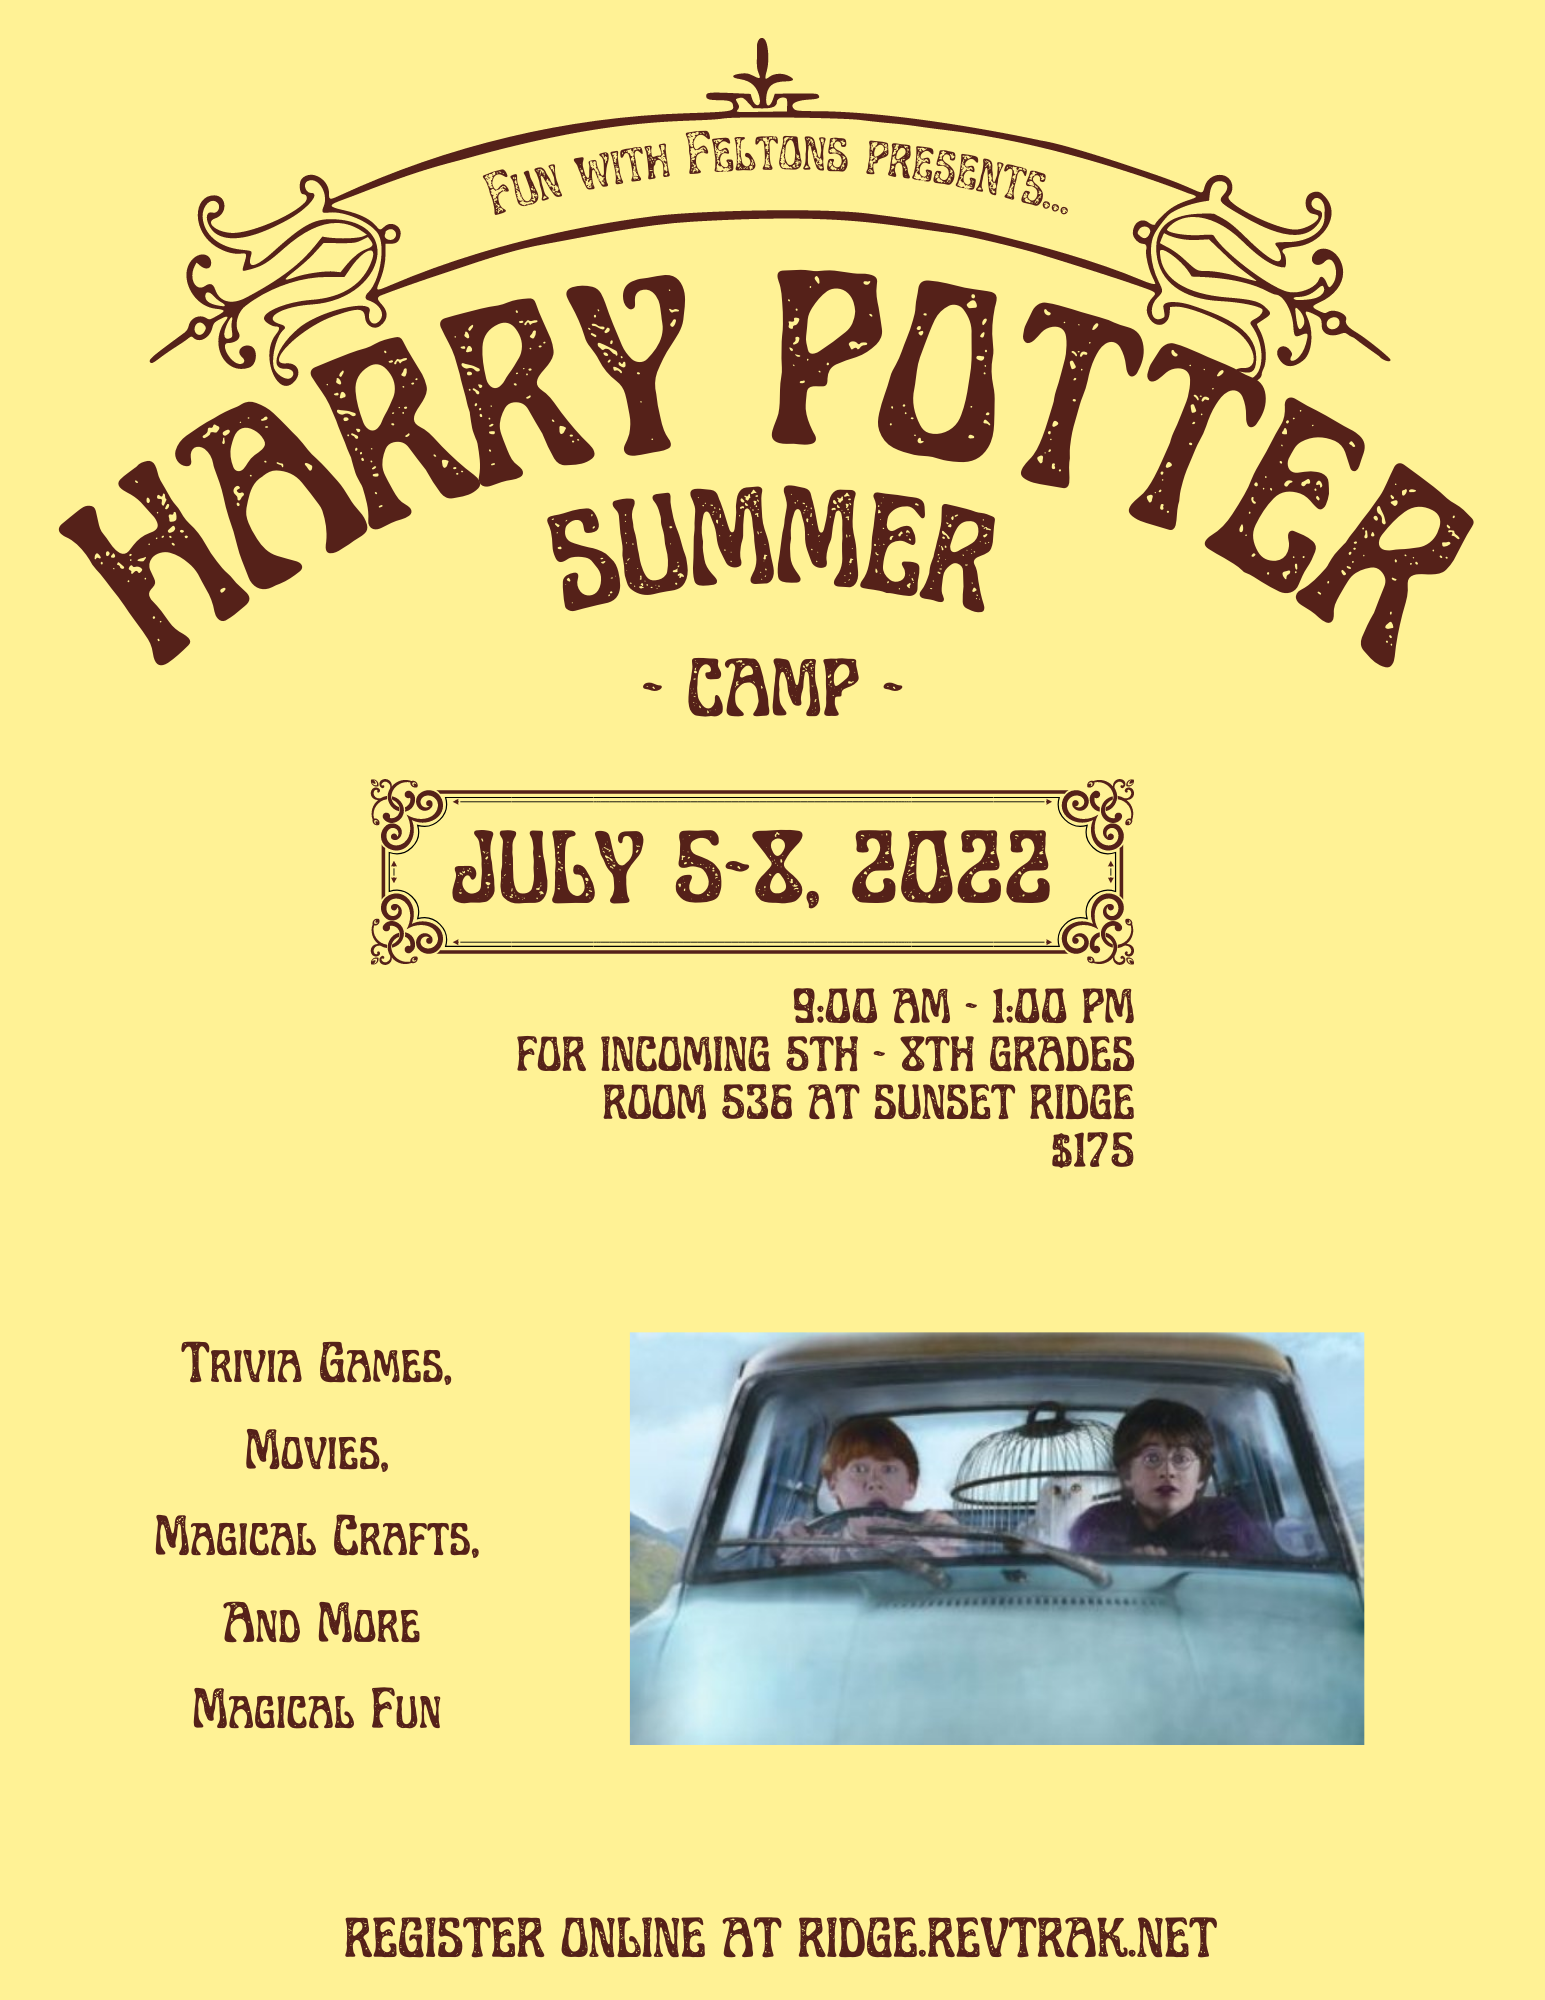 Harry Potter Summer Camp